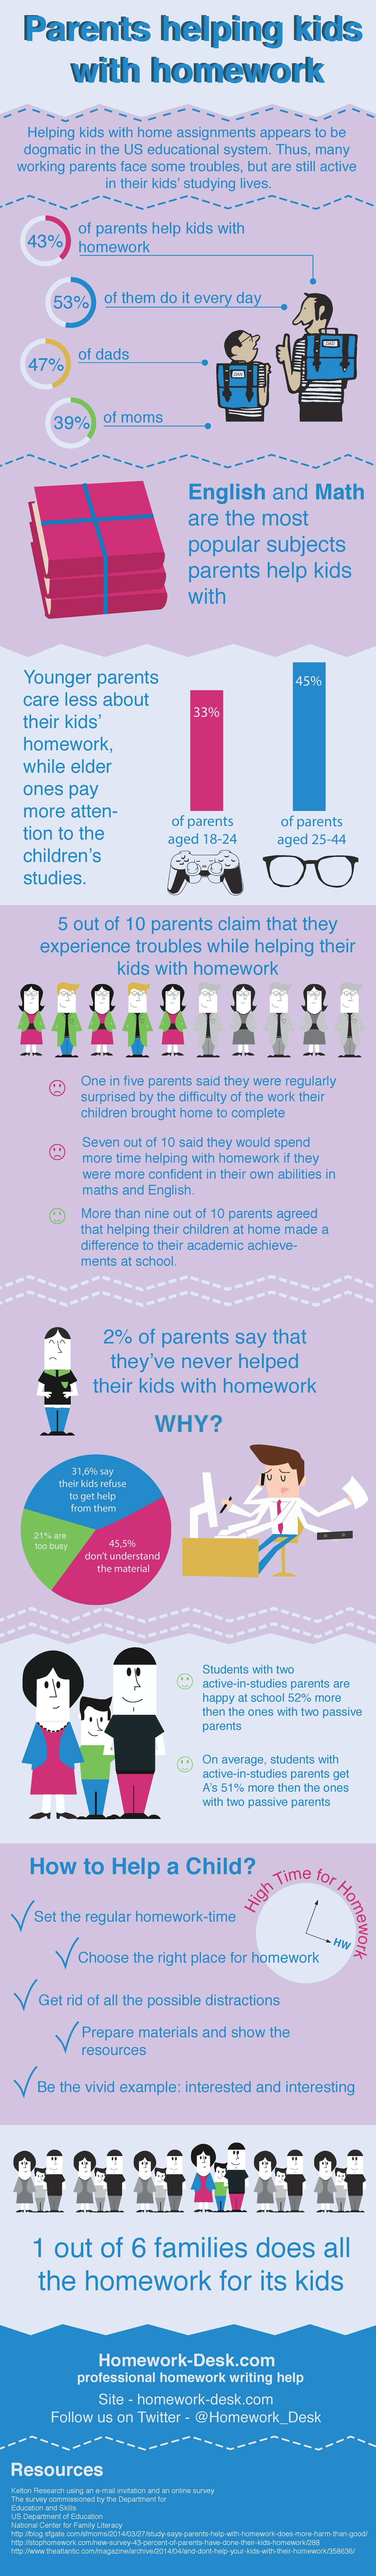 Parents Helping Kids with Homework by Homework-Desk.com